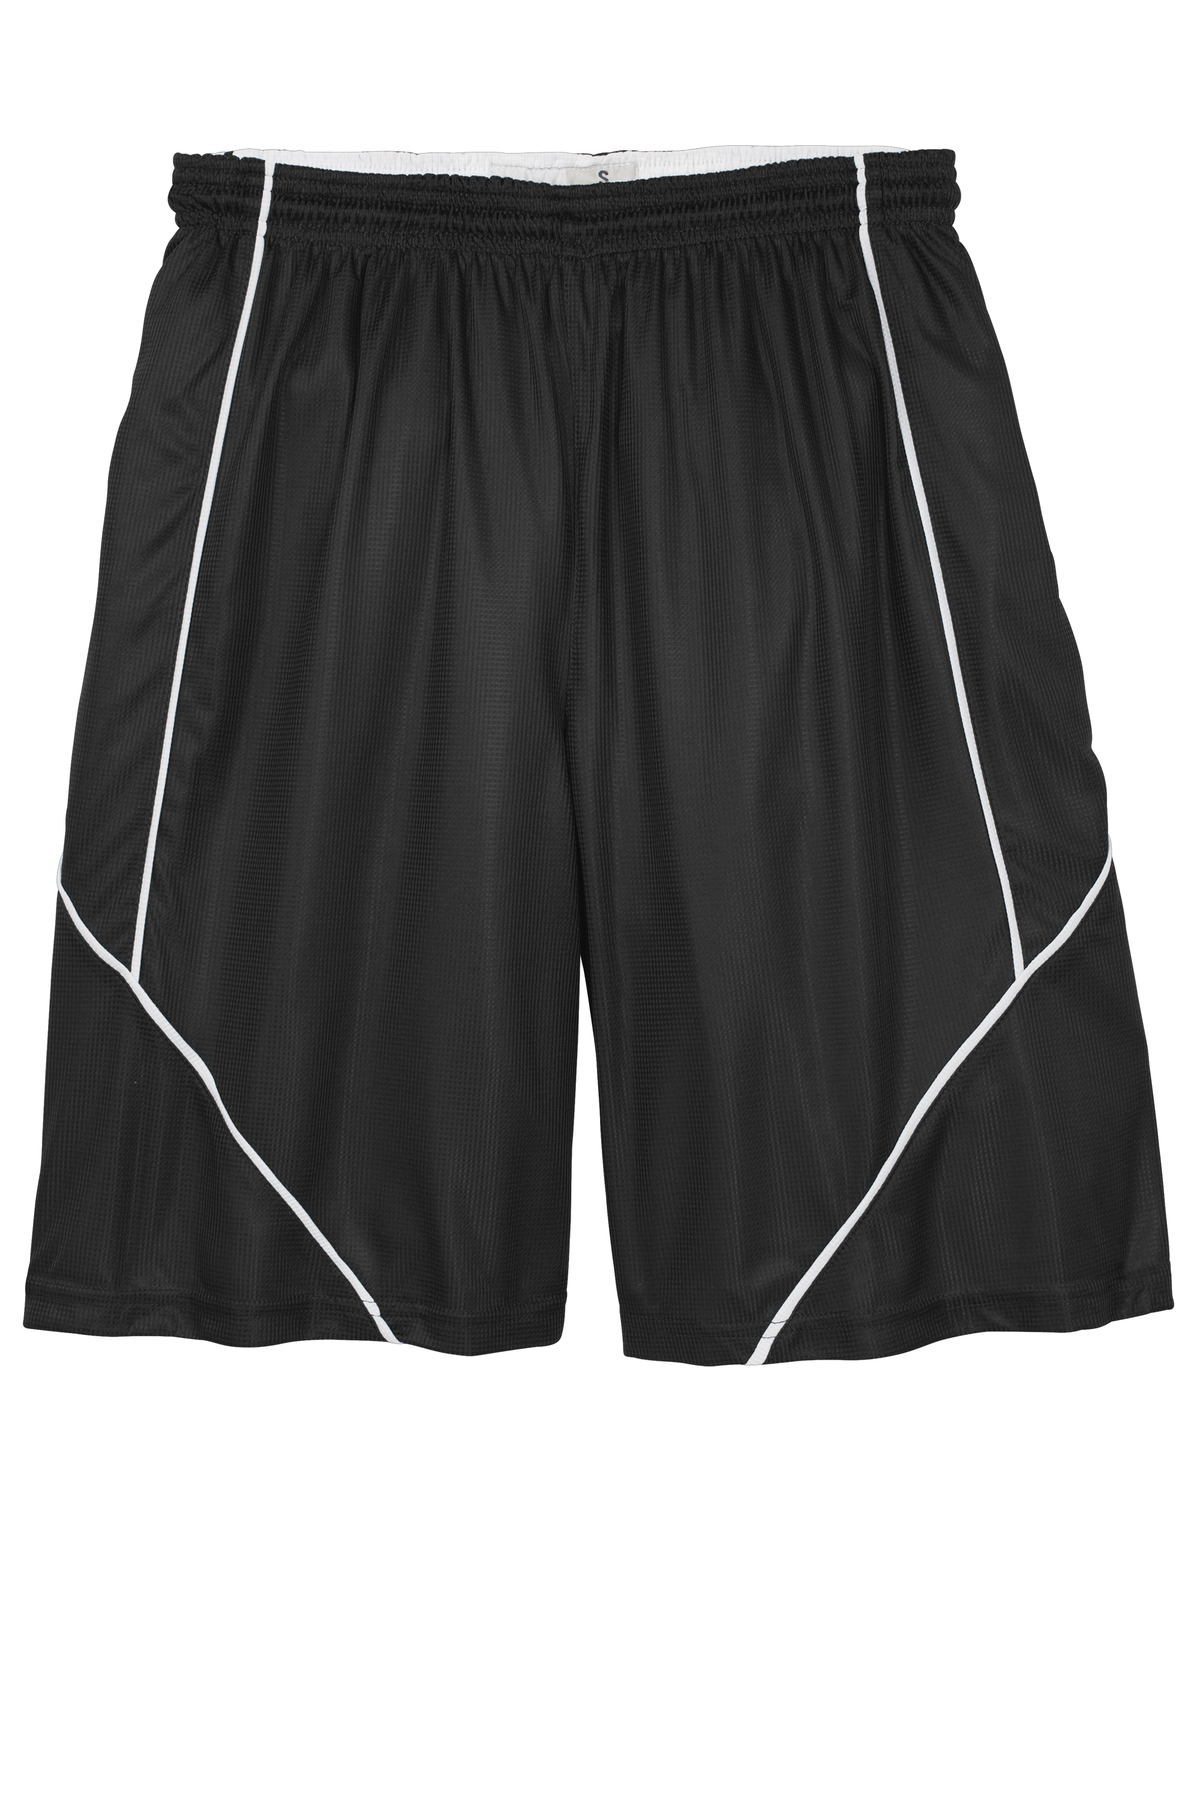 Uniform XS to 4XL Reversible Basketball Shorts T565 Sport Tek YT565 